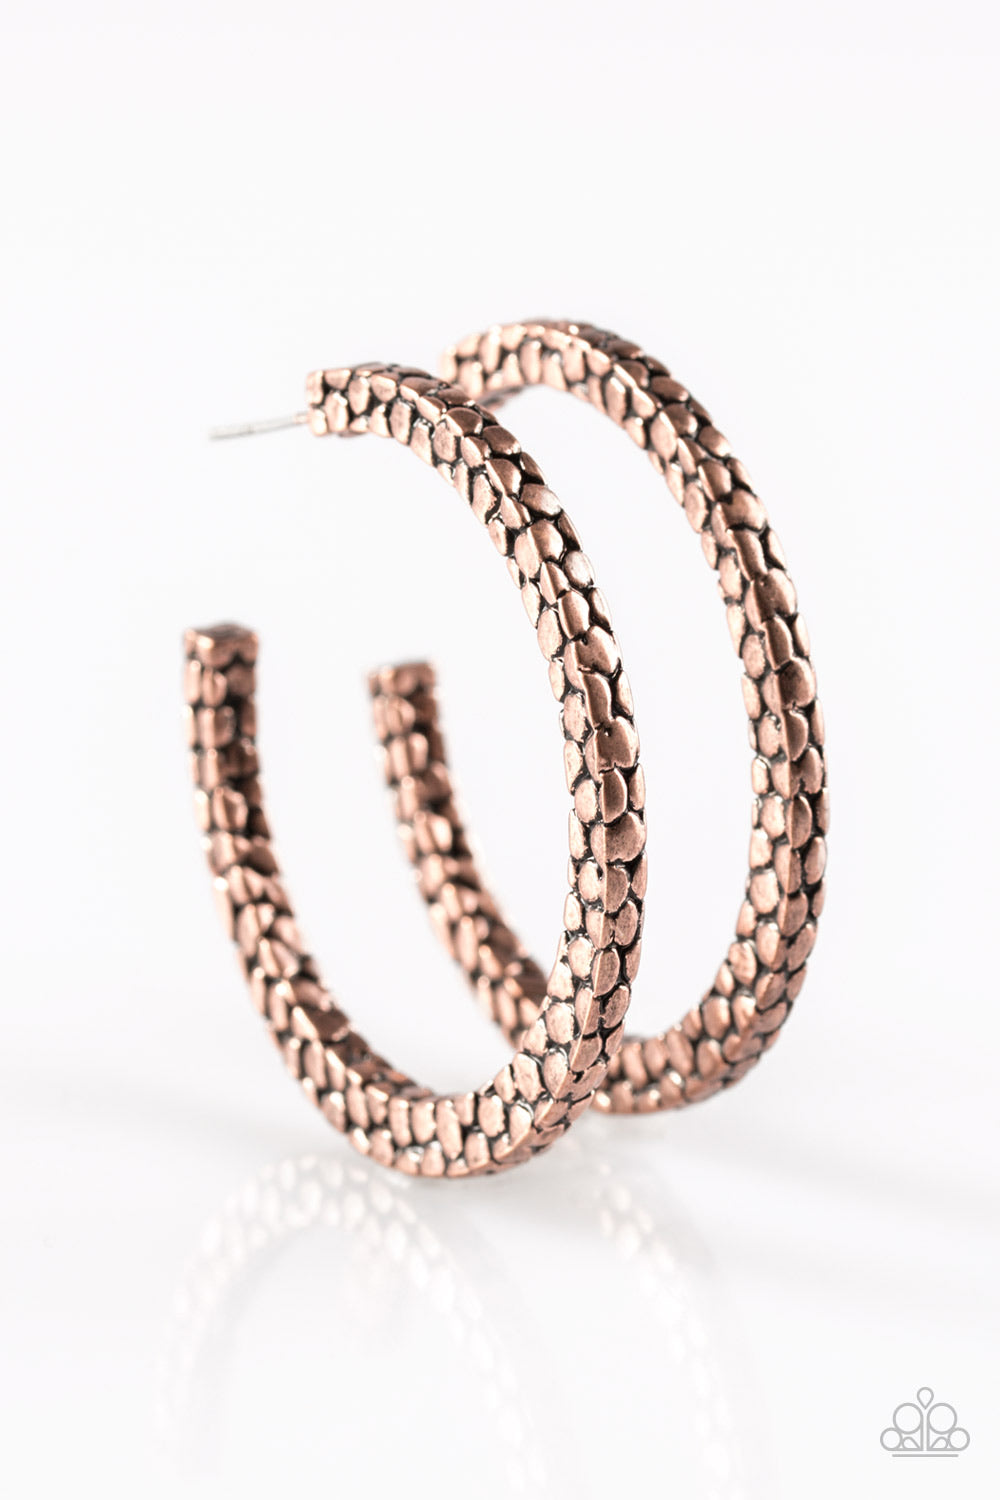 Make The Beast of It - Copper Hoop Earrings - Paparazzi Accessories